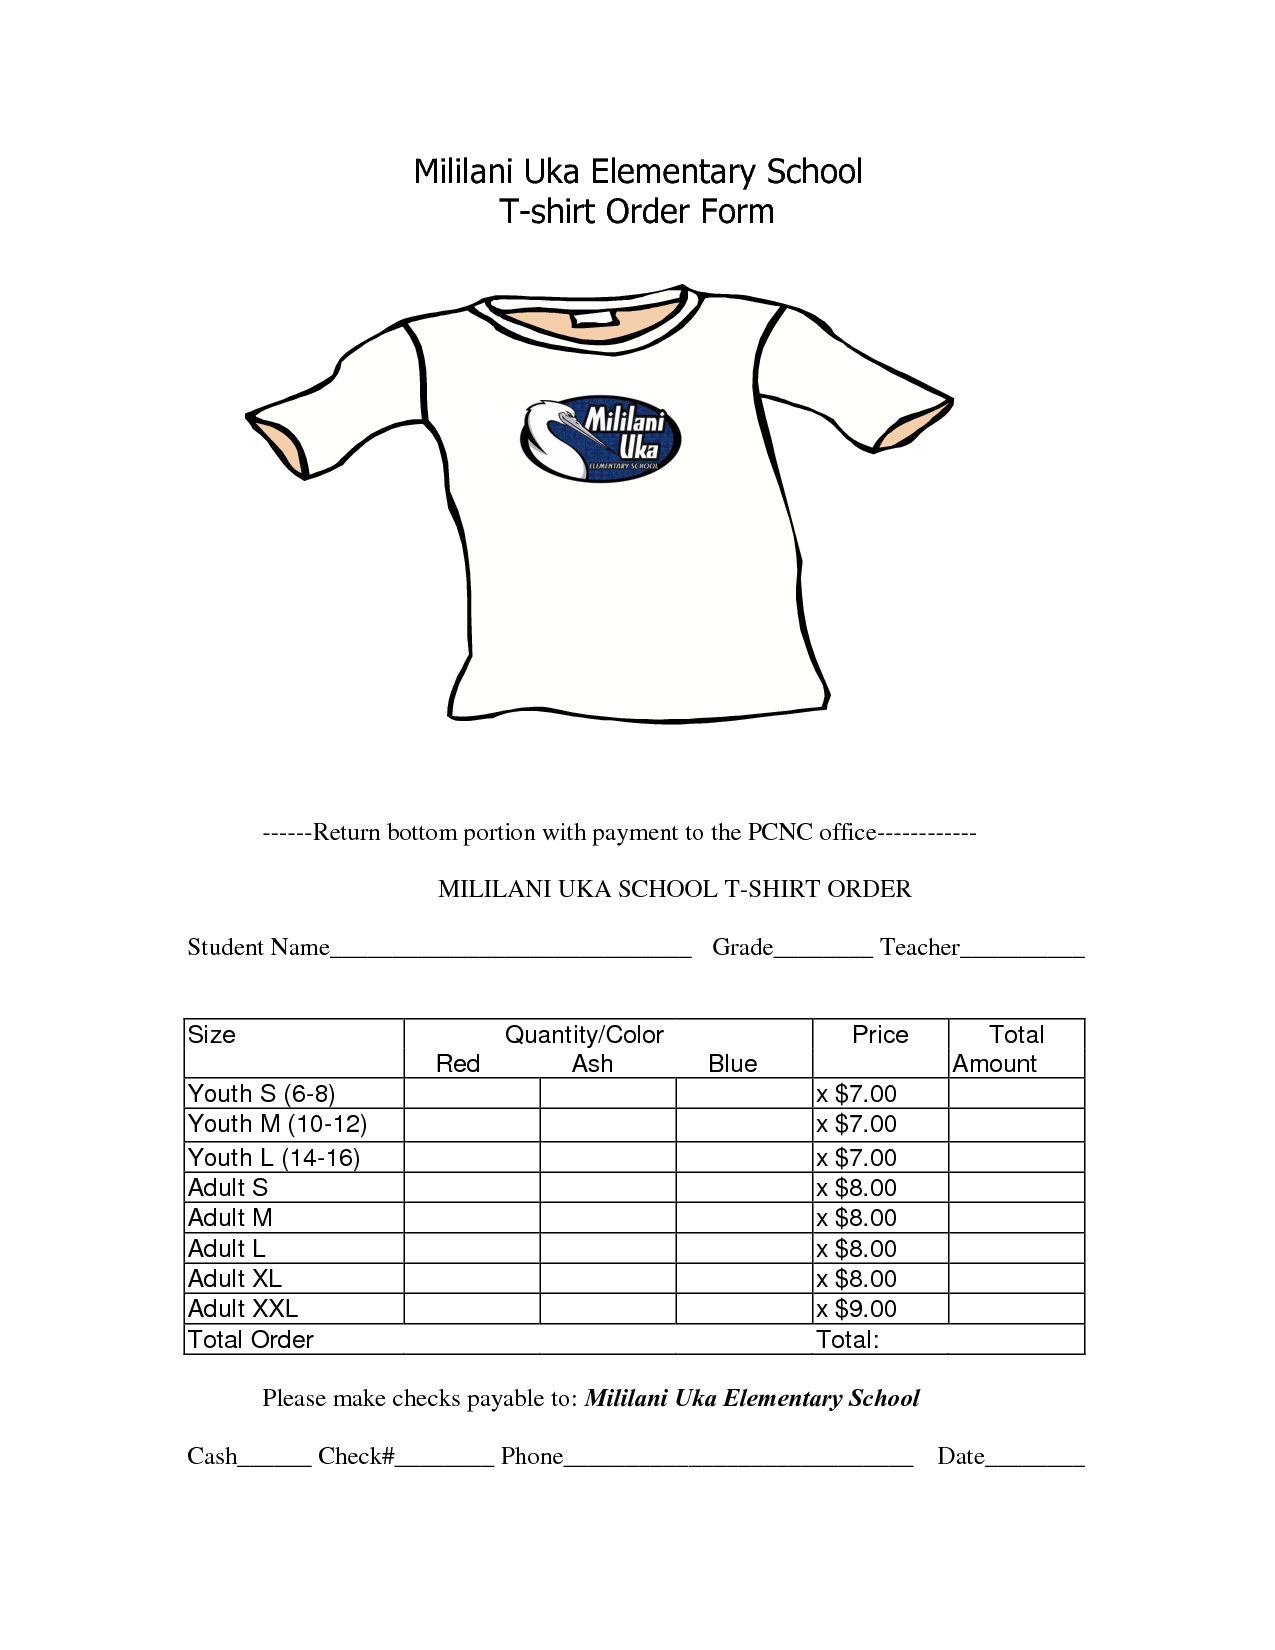 School T Shirt Order Form Template | Awana | Order Form With Regard To Blank T Shirt Order Form Template